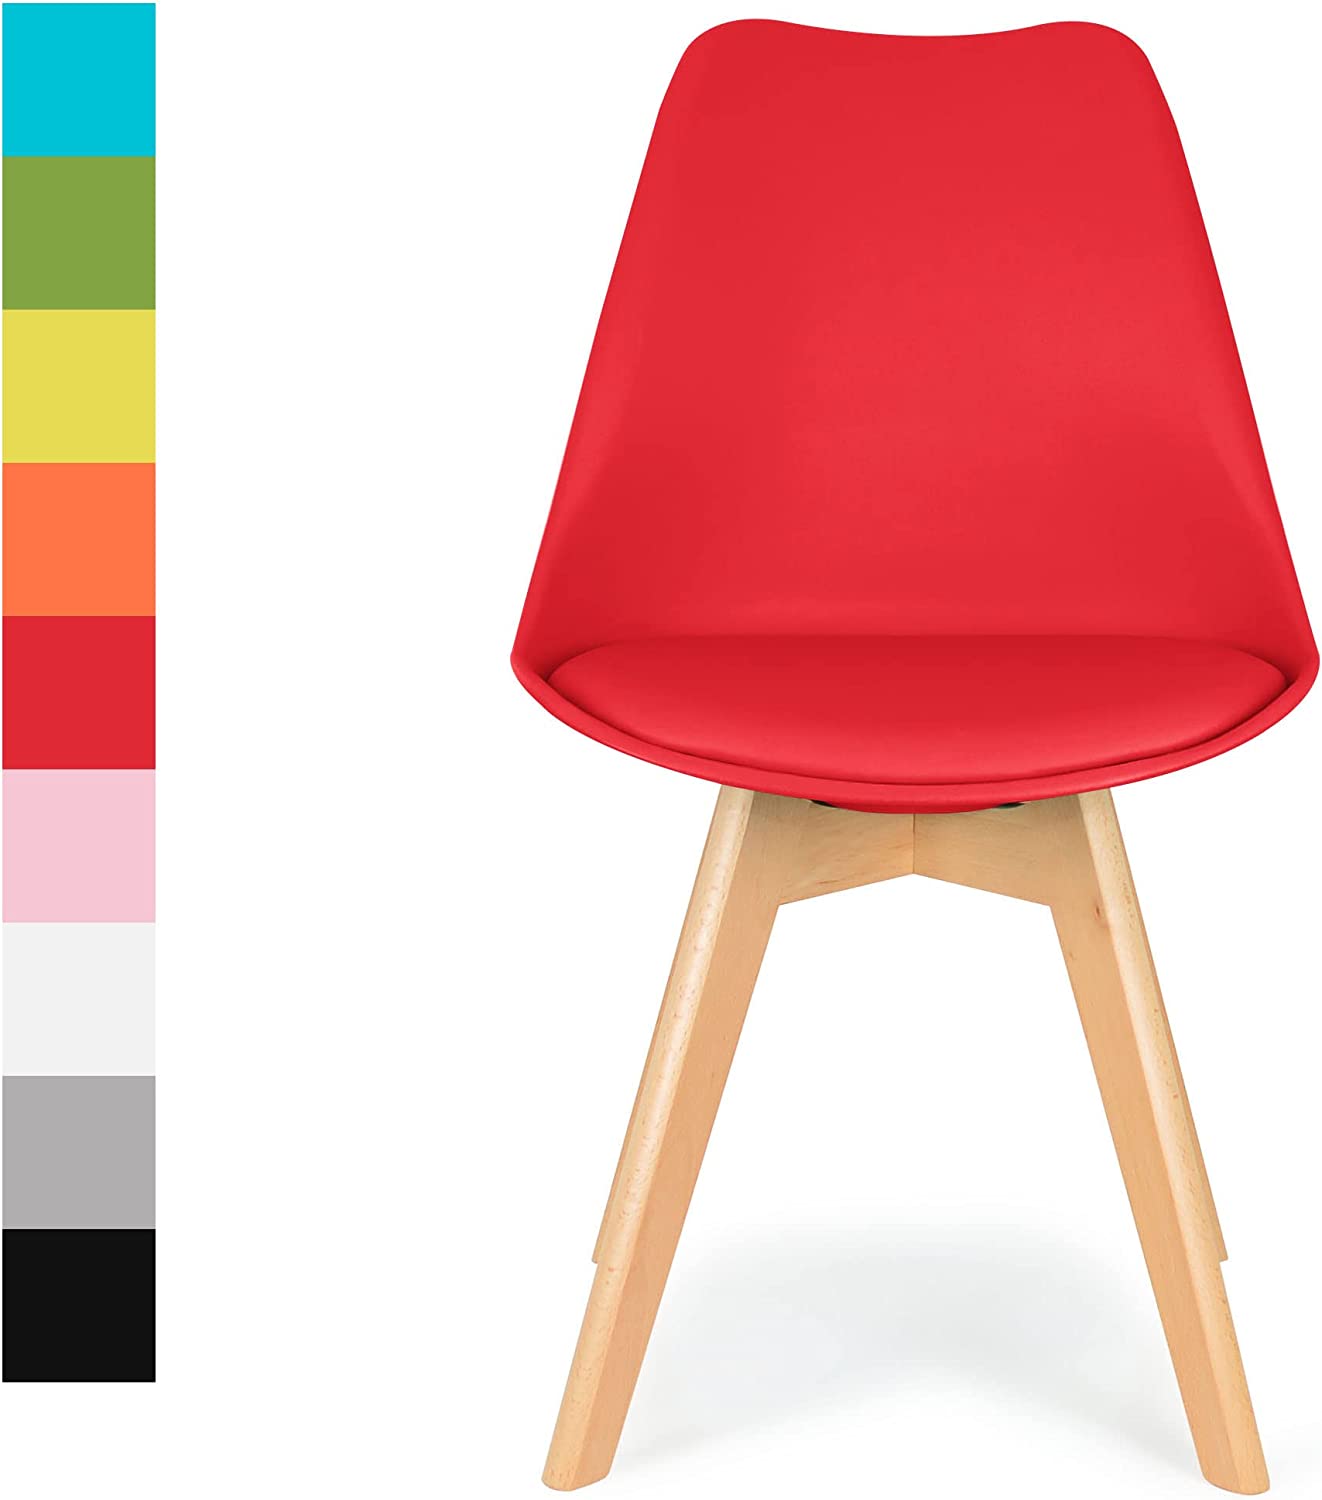 Distinct Designs Classic Mid-Century Design Dining Office Chair in durable Berry Red PP Plastic-Distinct Designs (London) Ltd